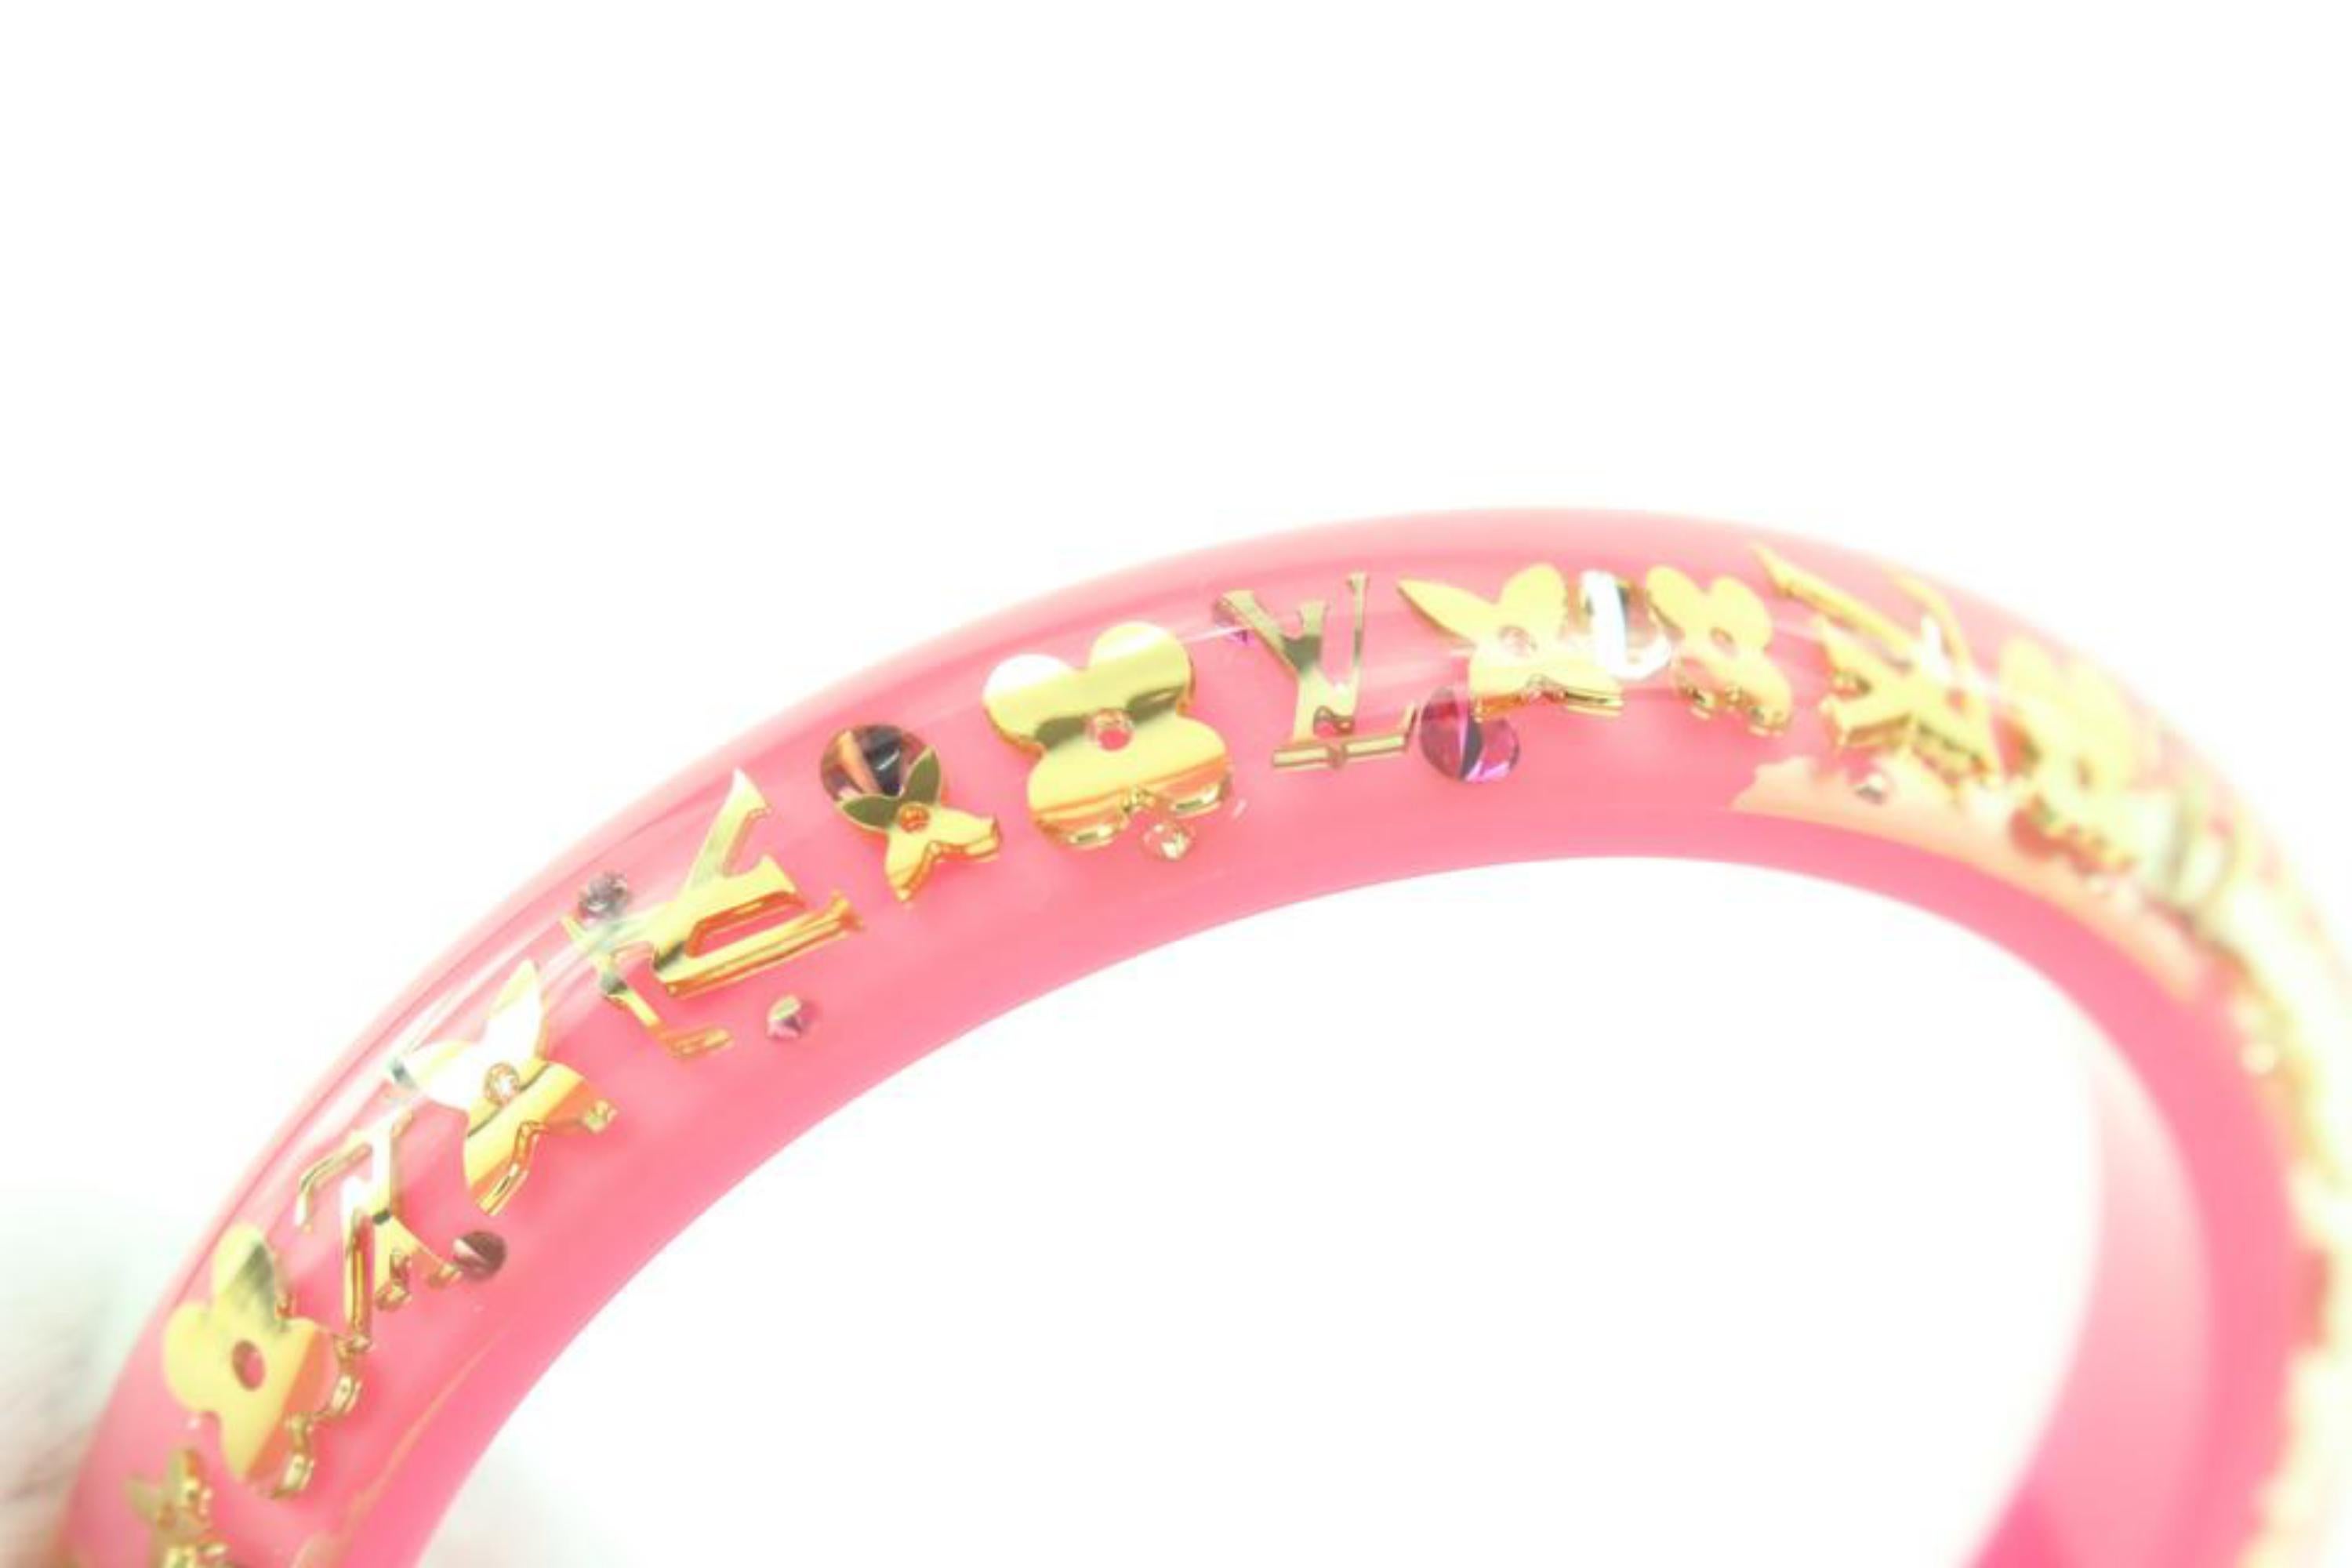 Louis Vuitton - Authenticated Inclusion Bracelet - Plastic Pink for Women, Very Good Condition